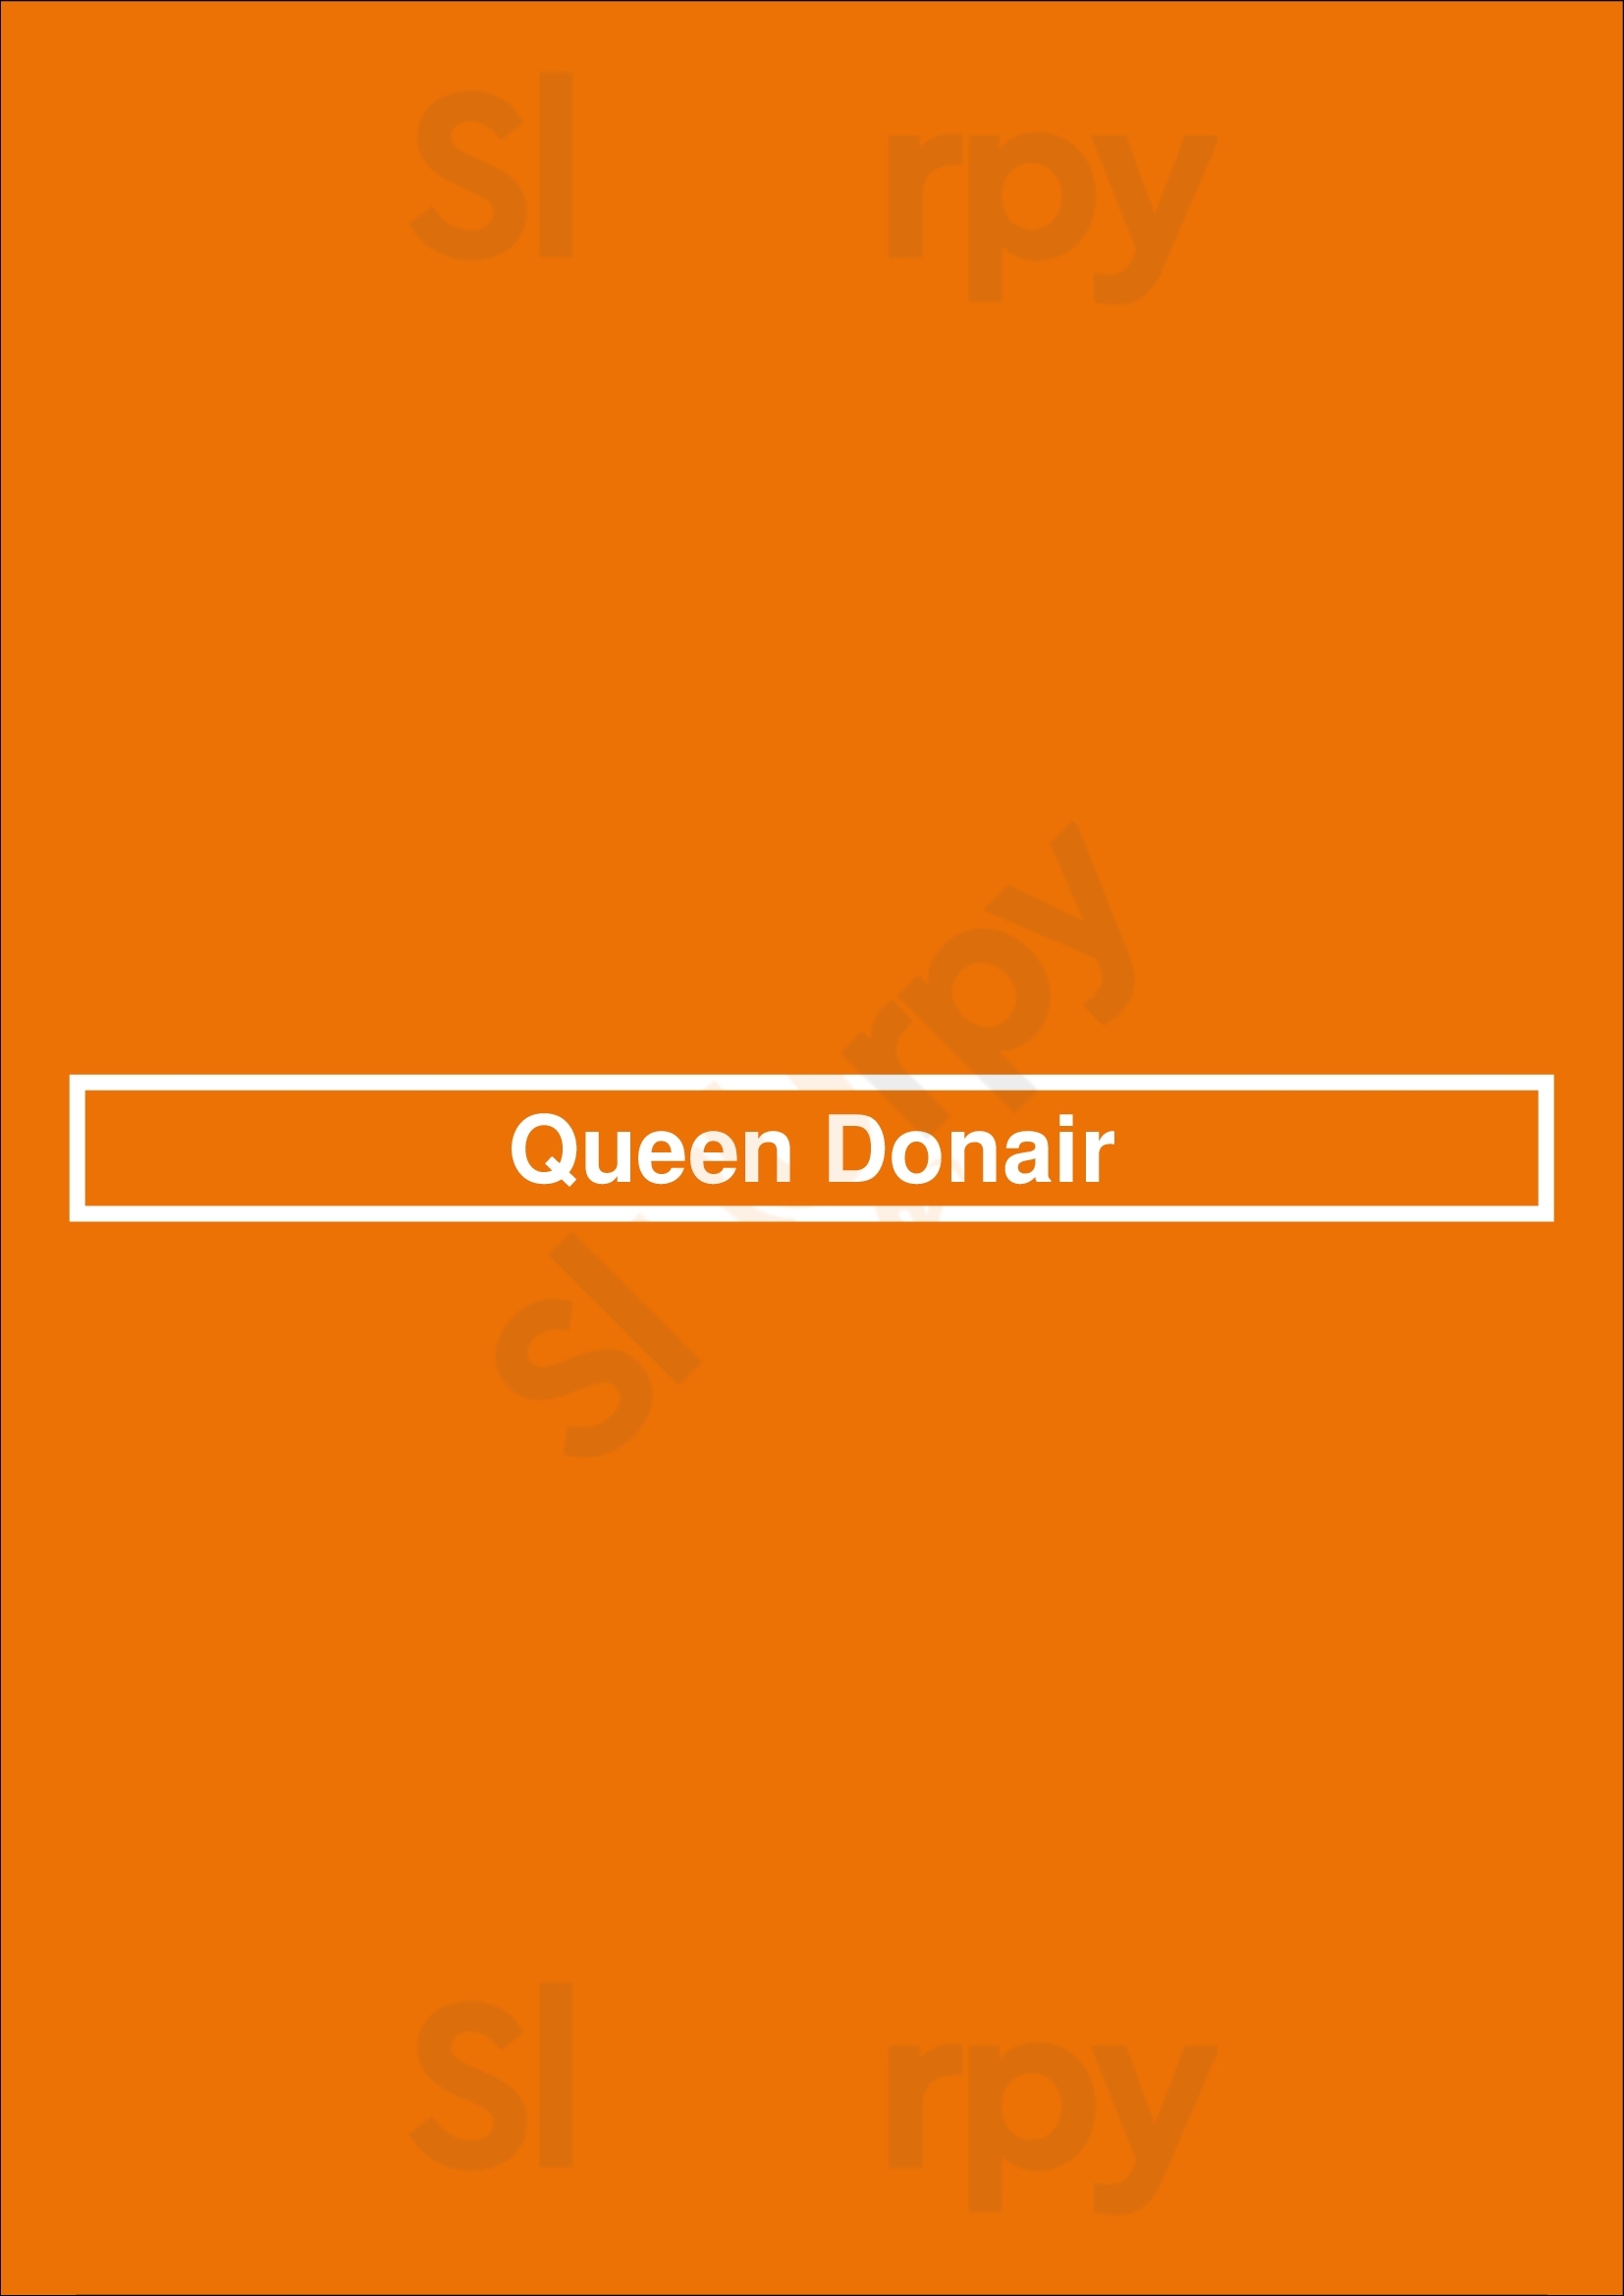 Queen Donair Edmonton Menu - 1